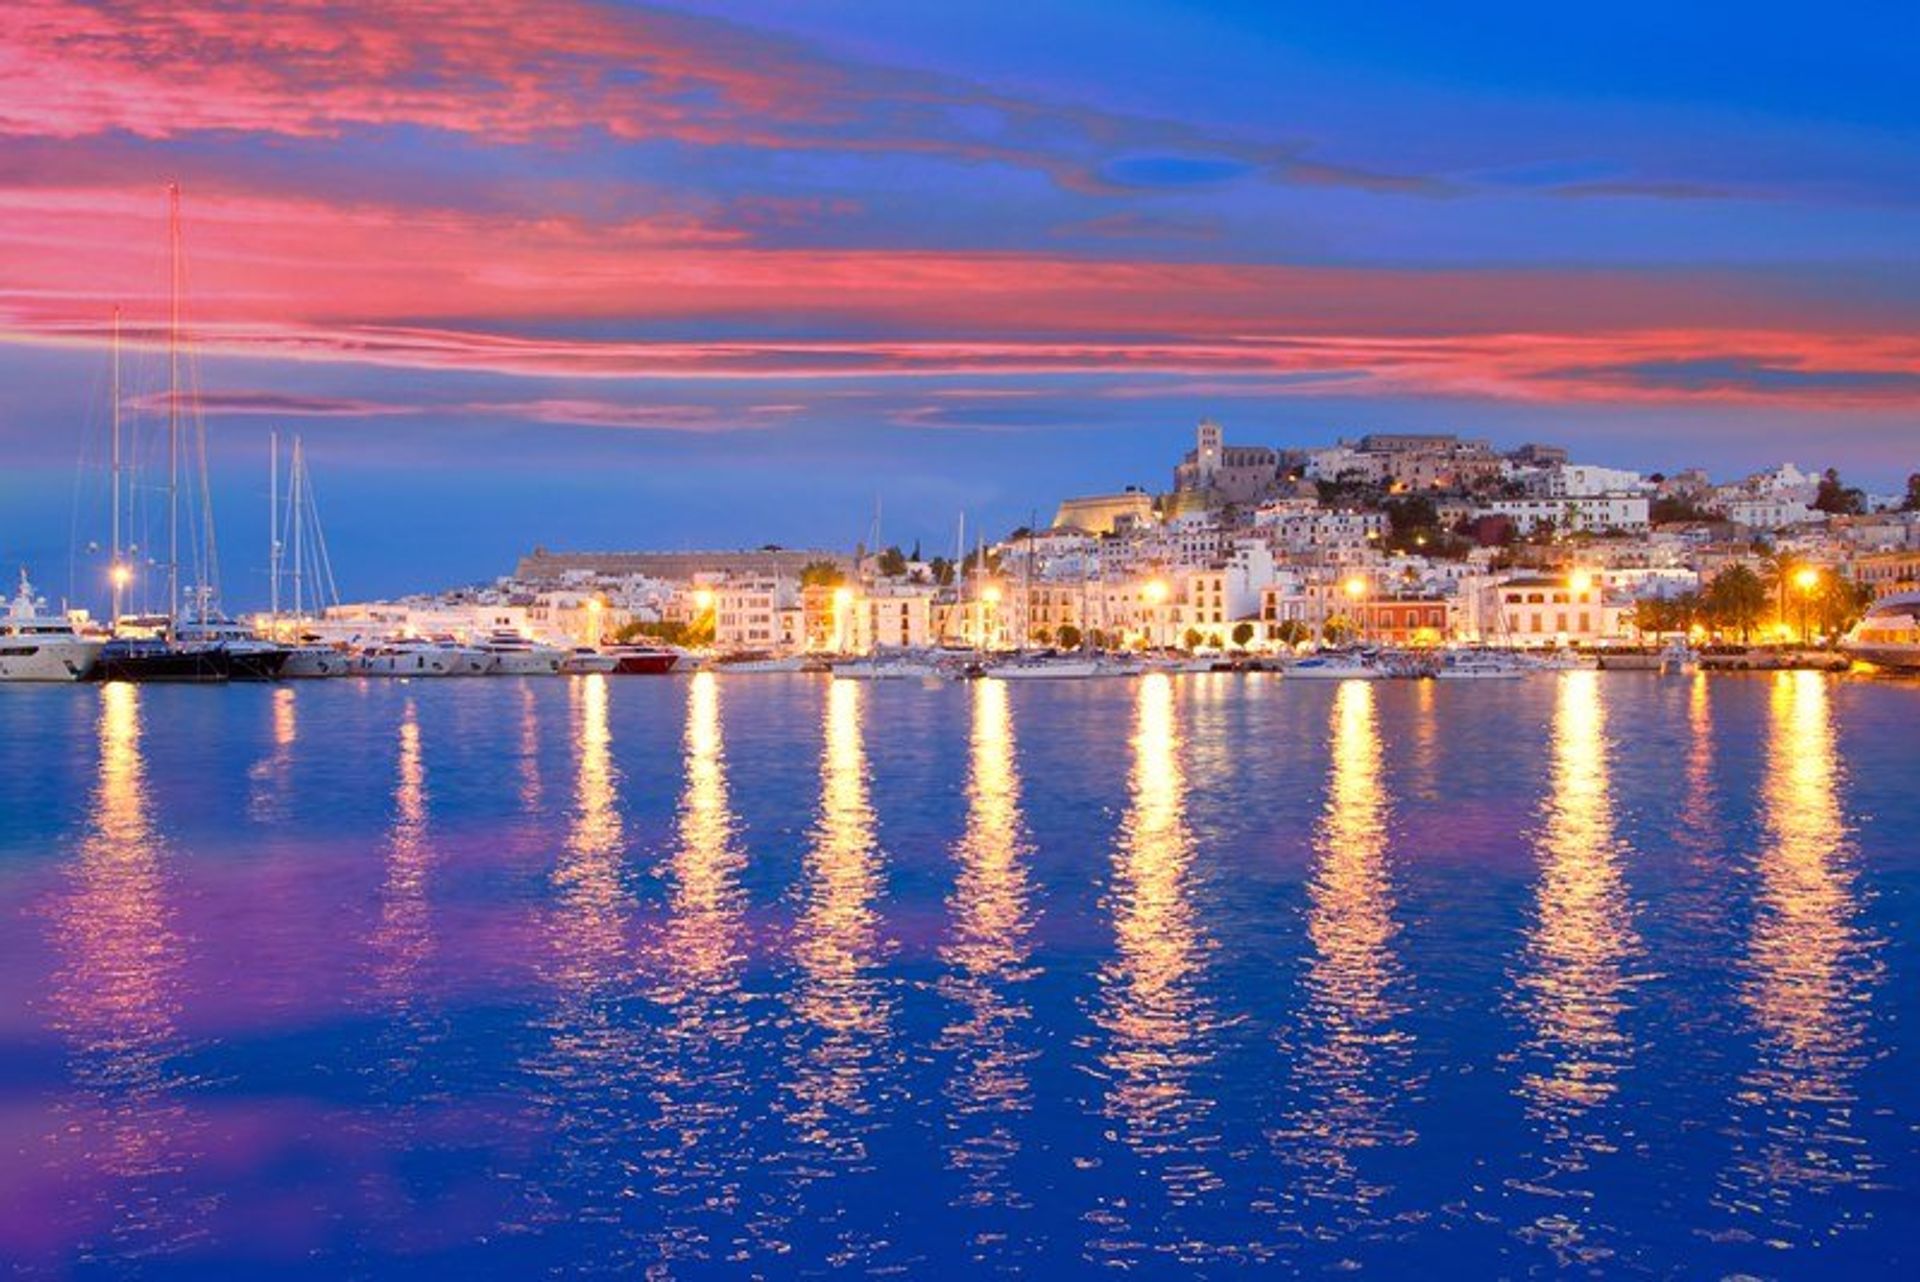 The colourful Ibiza sky at night